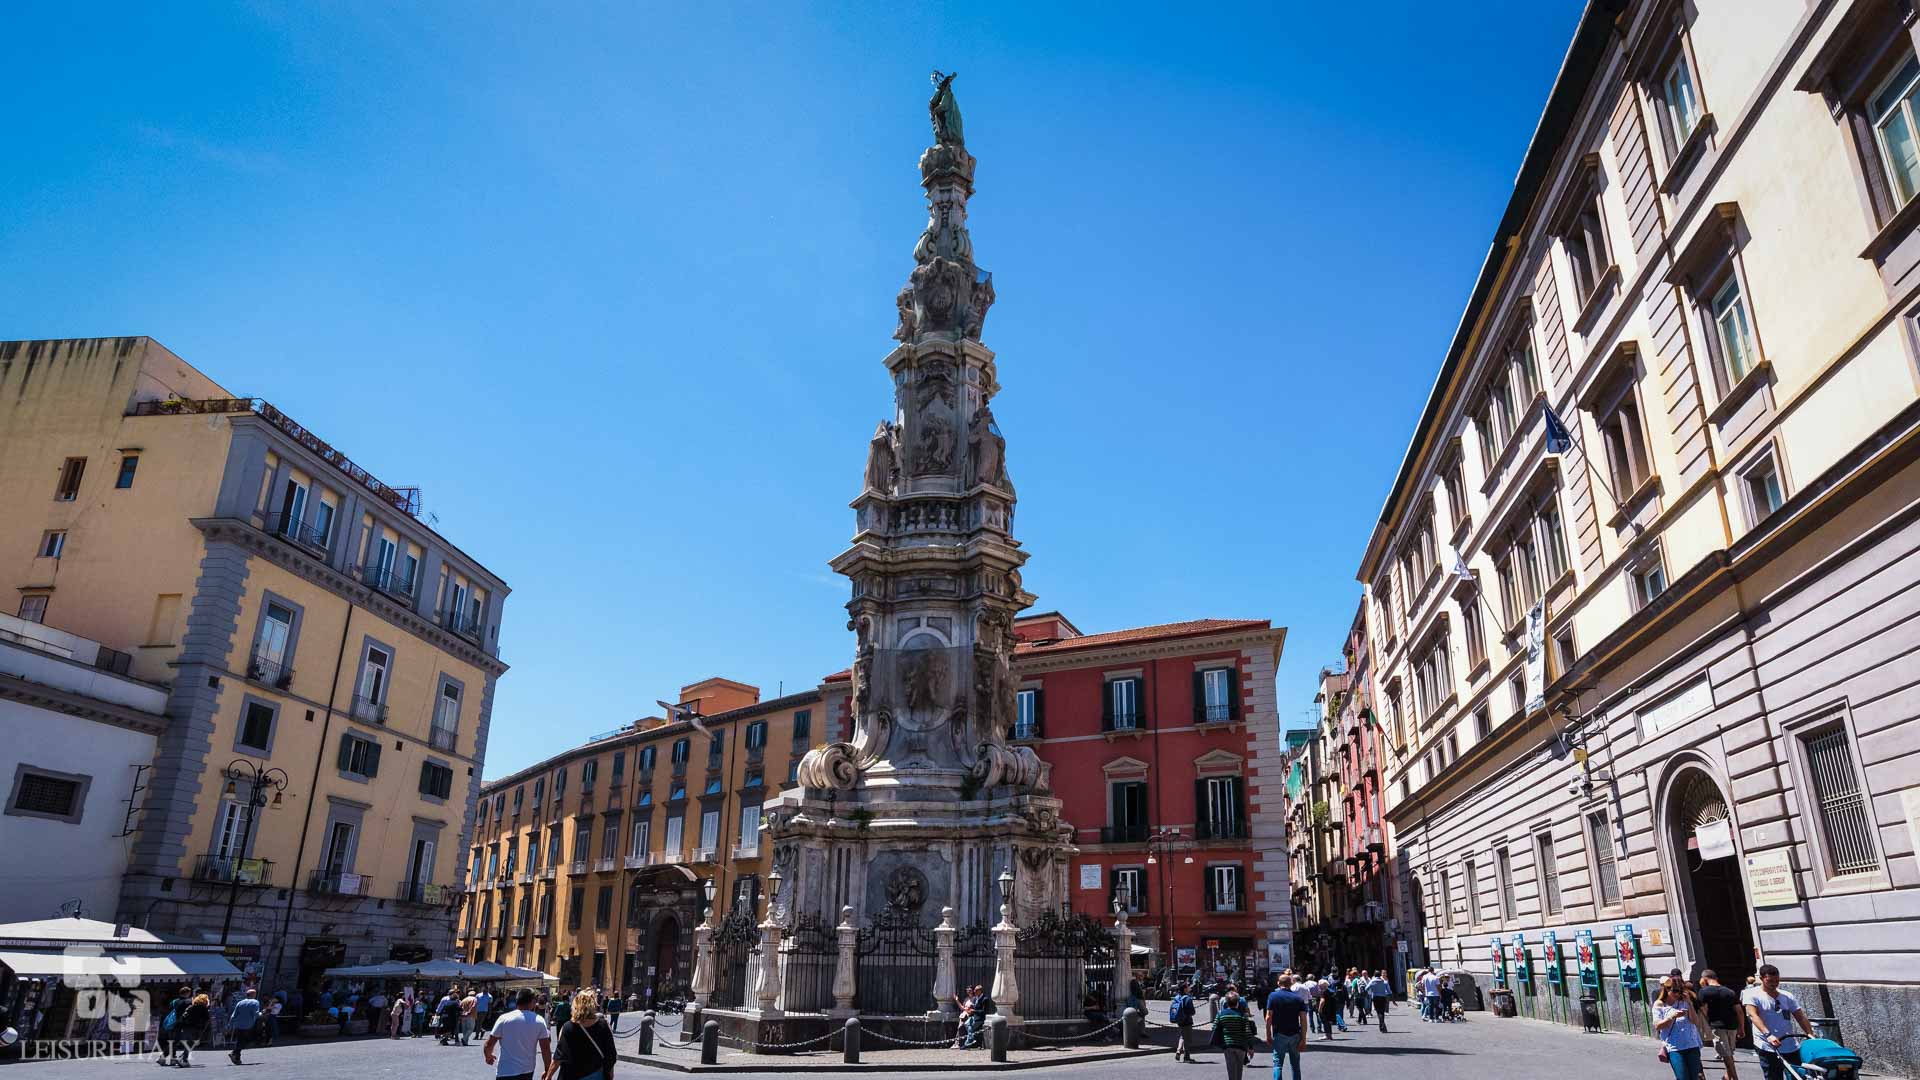 Naples Historic City Centre - Piazza del Gesù